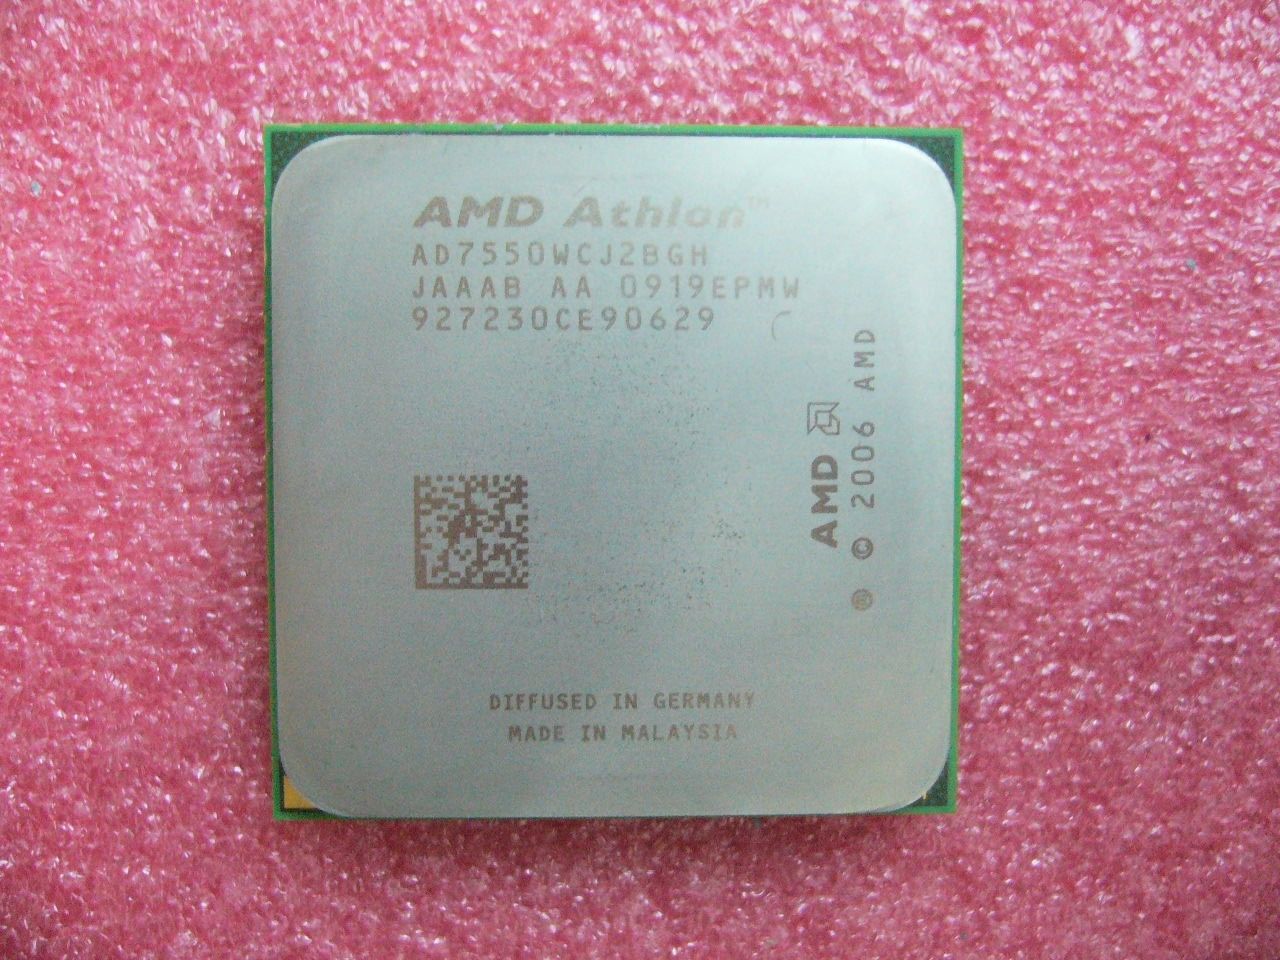 QTY 1x AMD Athlon X2 7550 2.5 GHz Dual-Core (AD7550WCJ2BGH) CPU Socket AM2+ - Click Image to Close